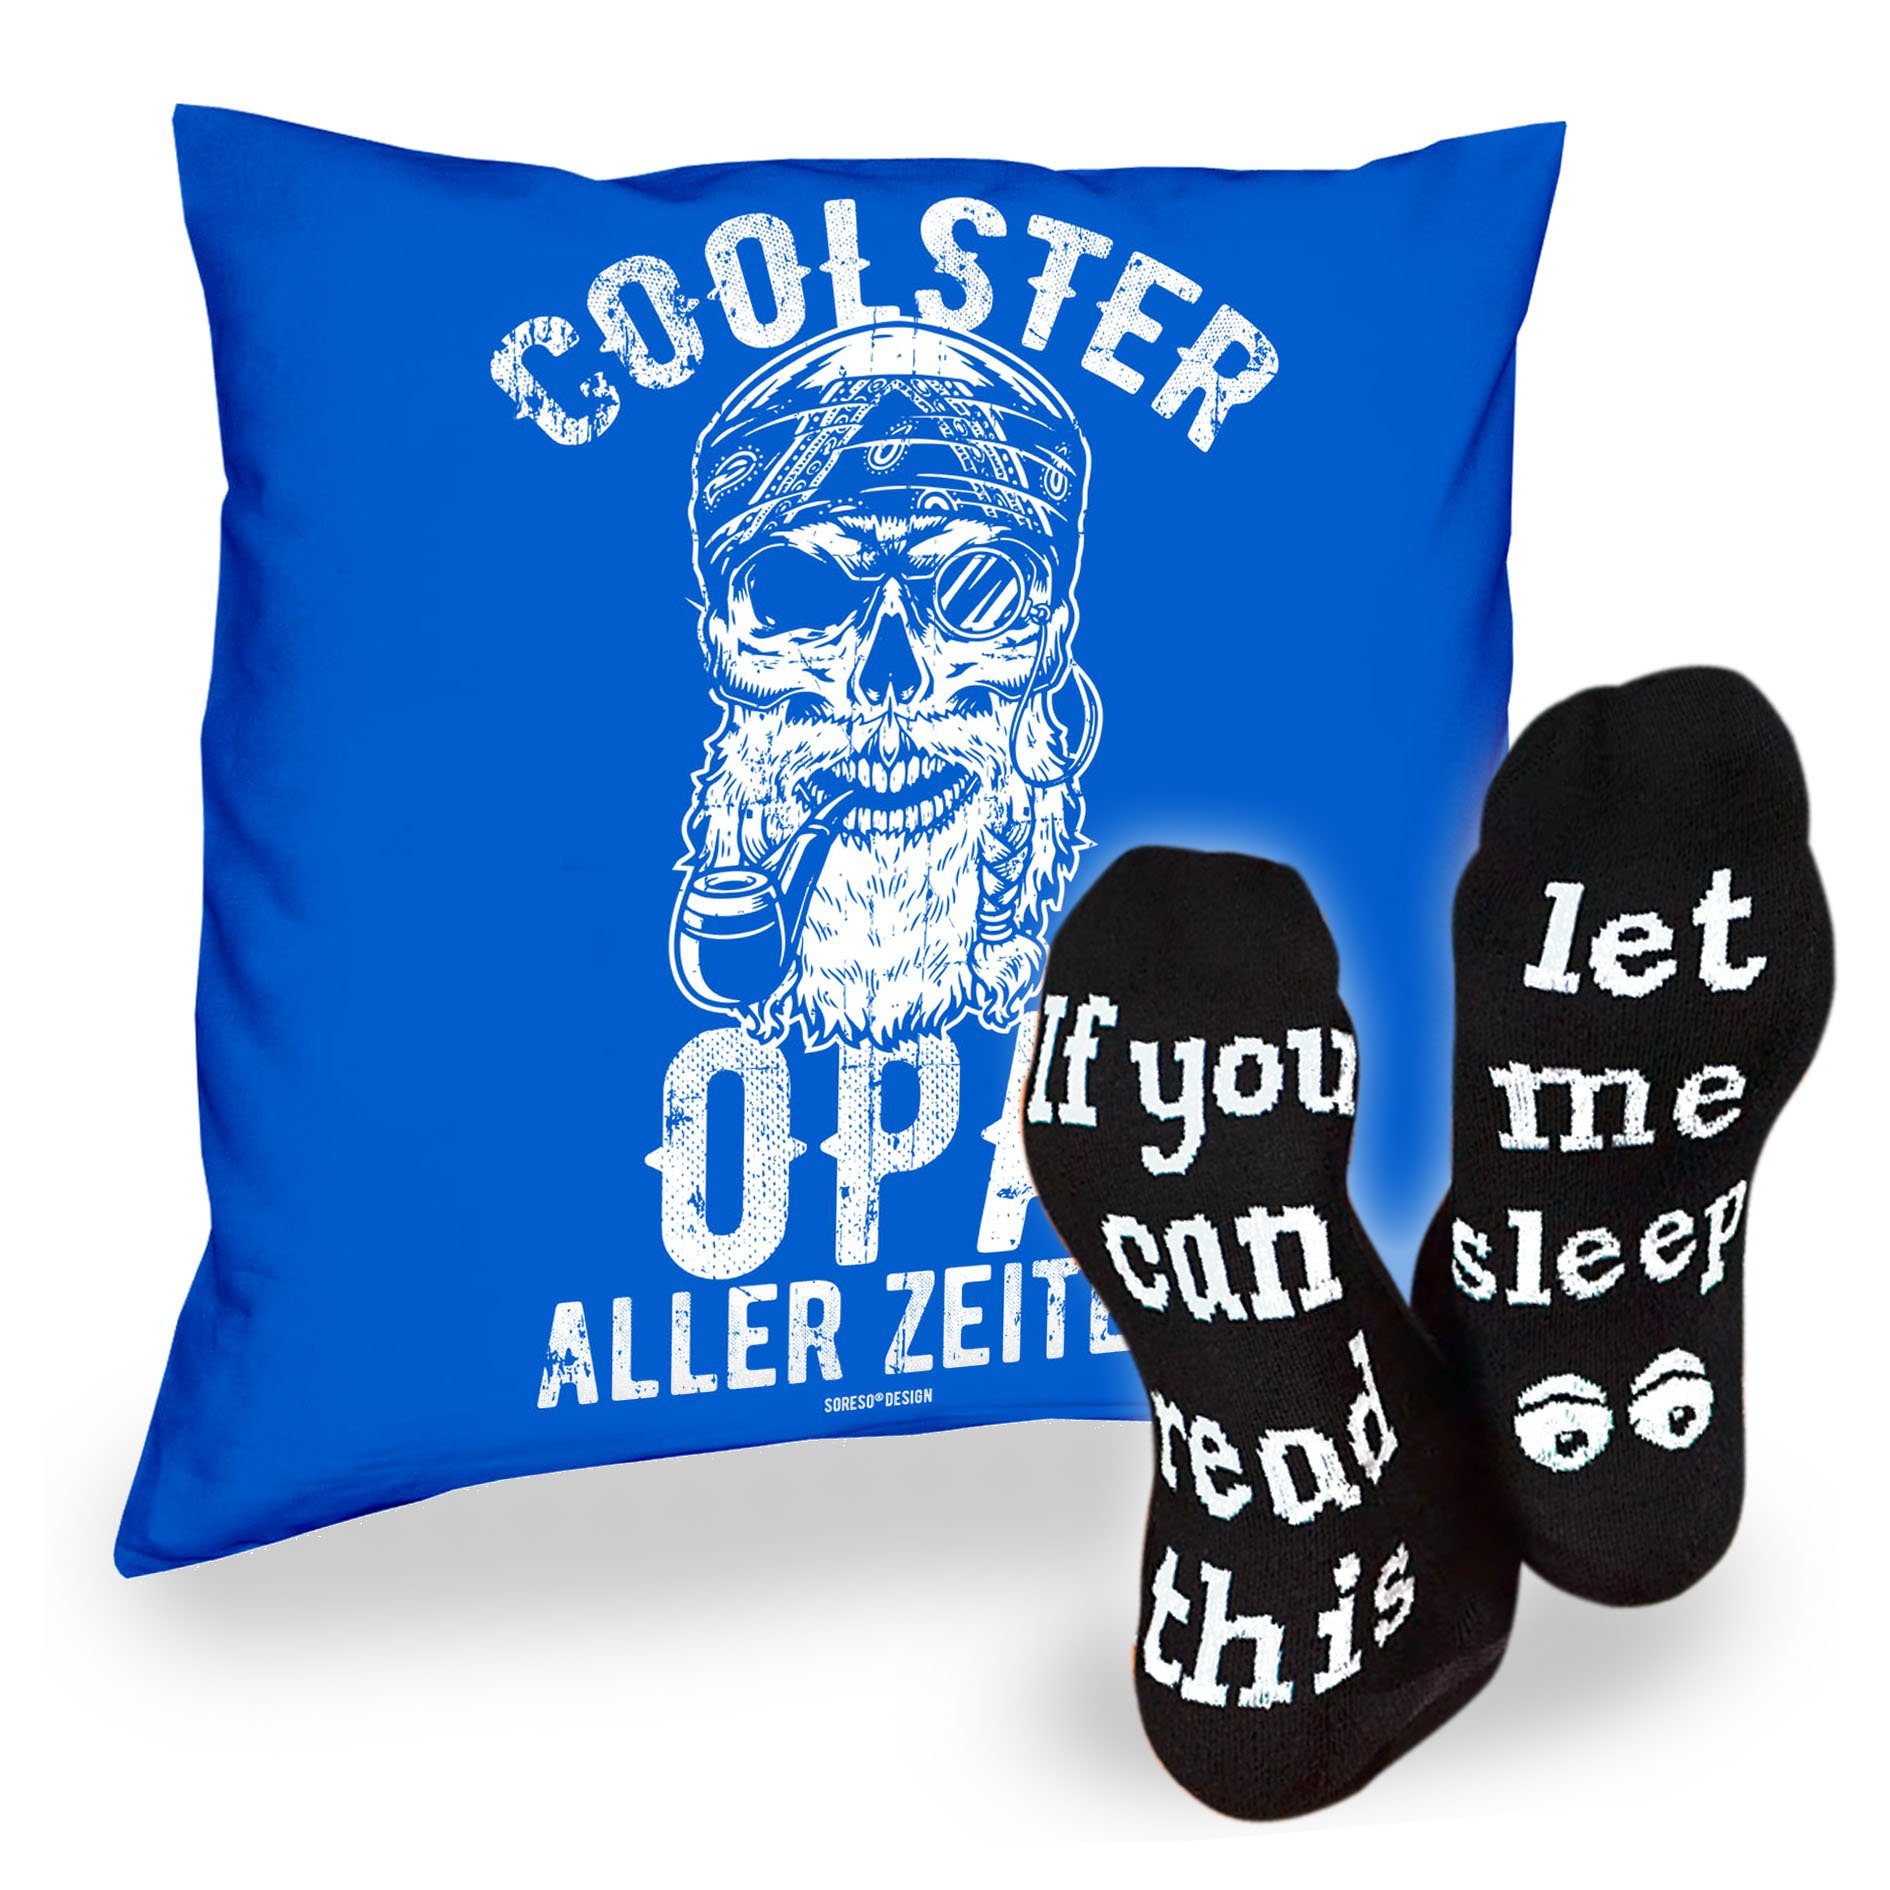 Soreso® Dekokissen Kissen Coolster Vatertagsgeschenk Socken aller Zeiten Sprüche Opa Männer & royal-blau Opa Sleep